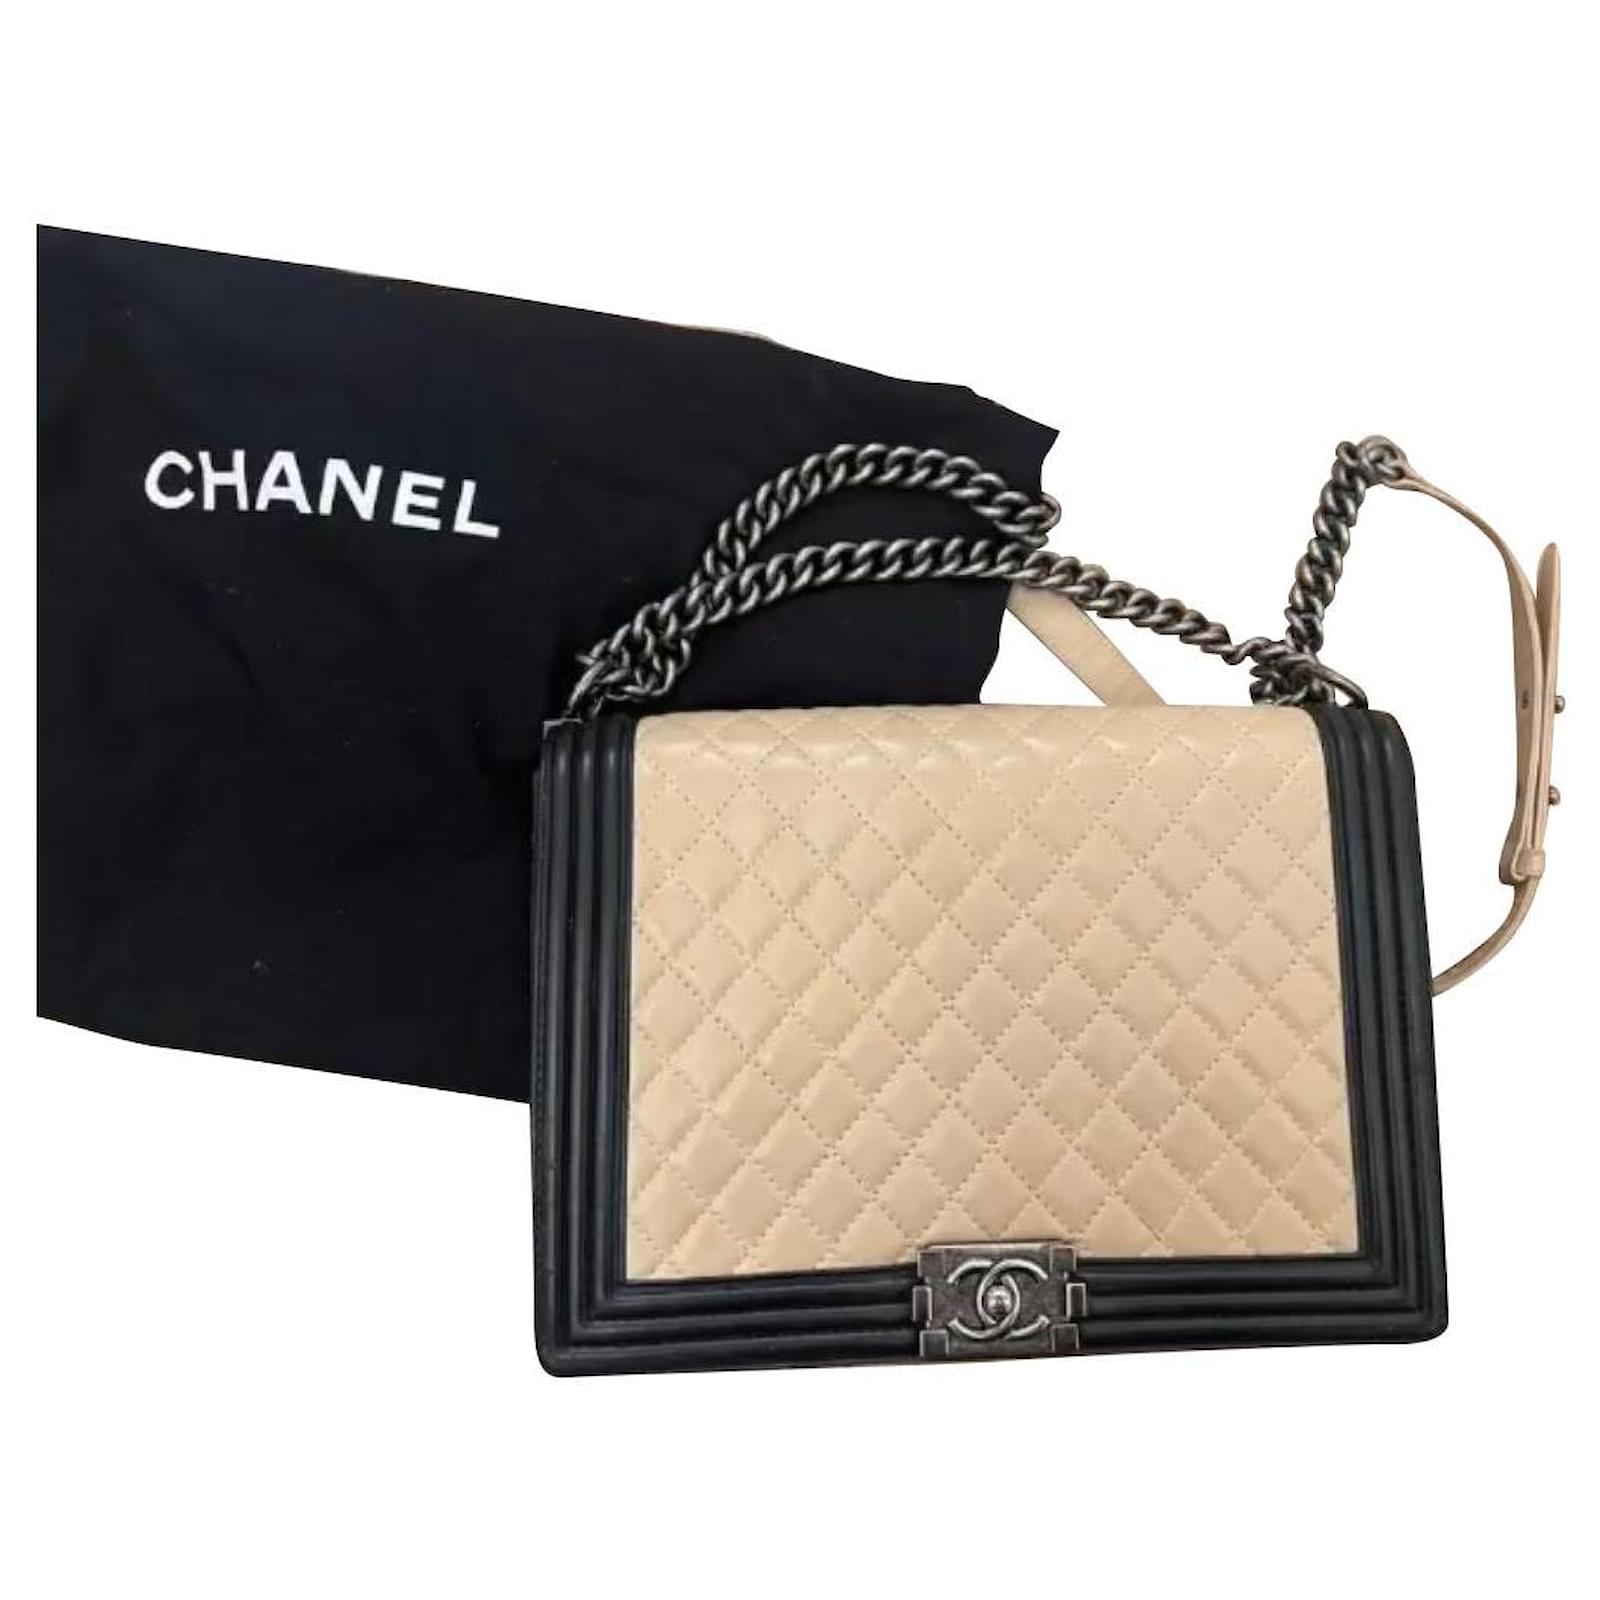 Chanel LARGE BOY SHOULDER BAG Lambskin LEATHER NUDE and BLACK